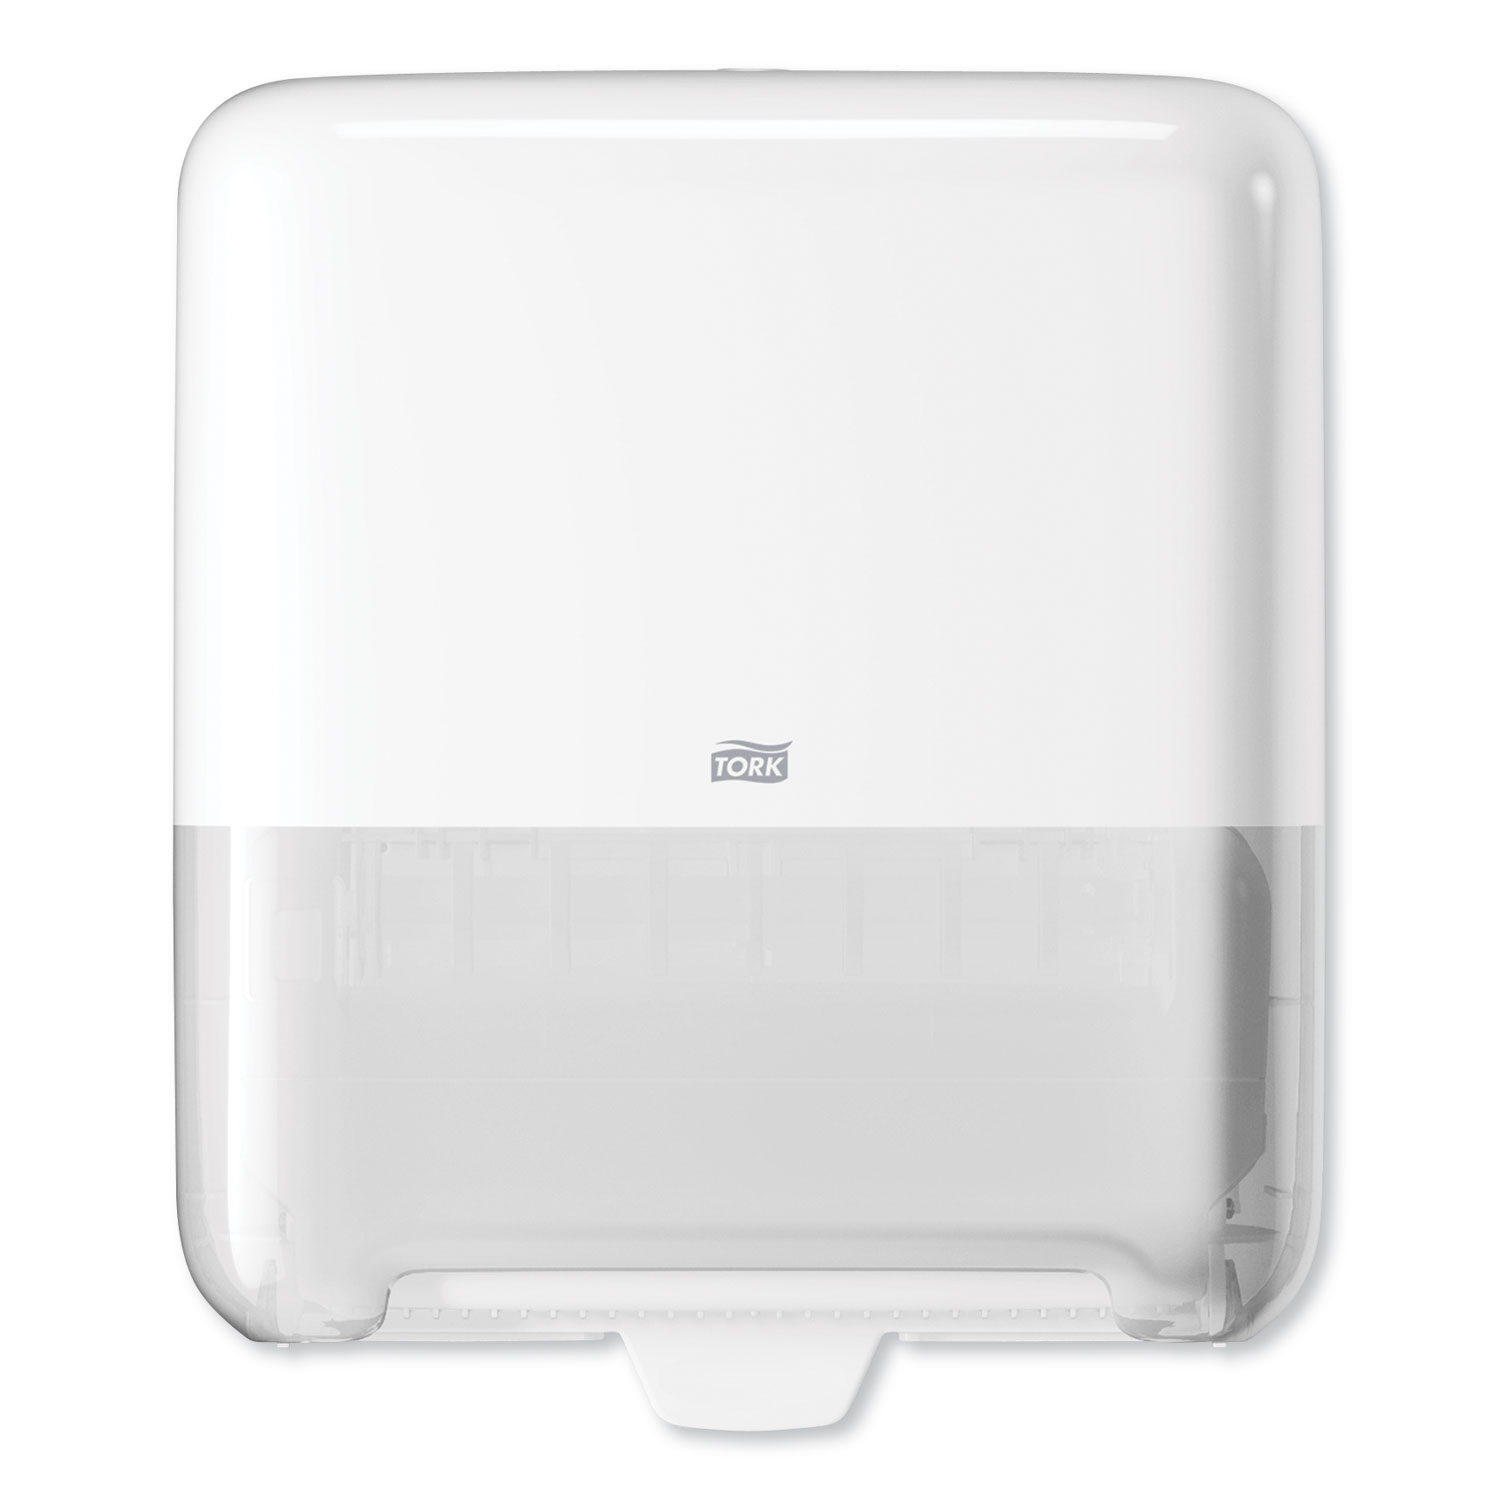  Tork 5510202 Elevation Matic Hand Towel Roll Dispenser, 13.2 x 8.1 x 14.65, White (TRK5510202) 